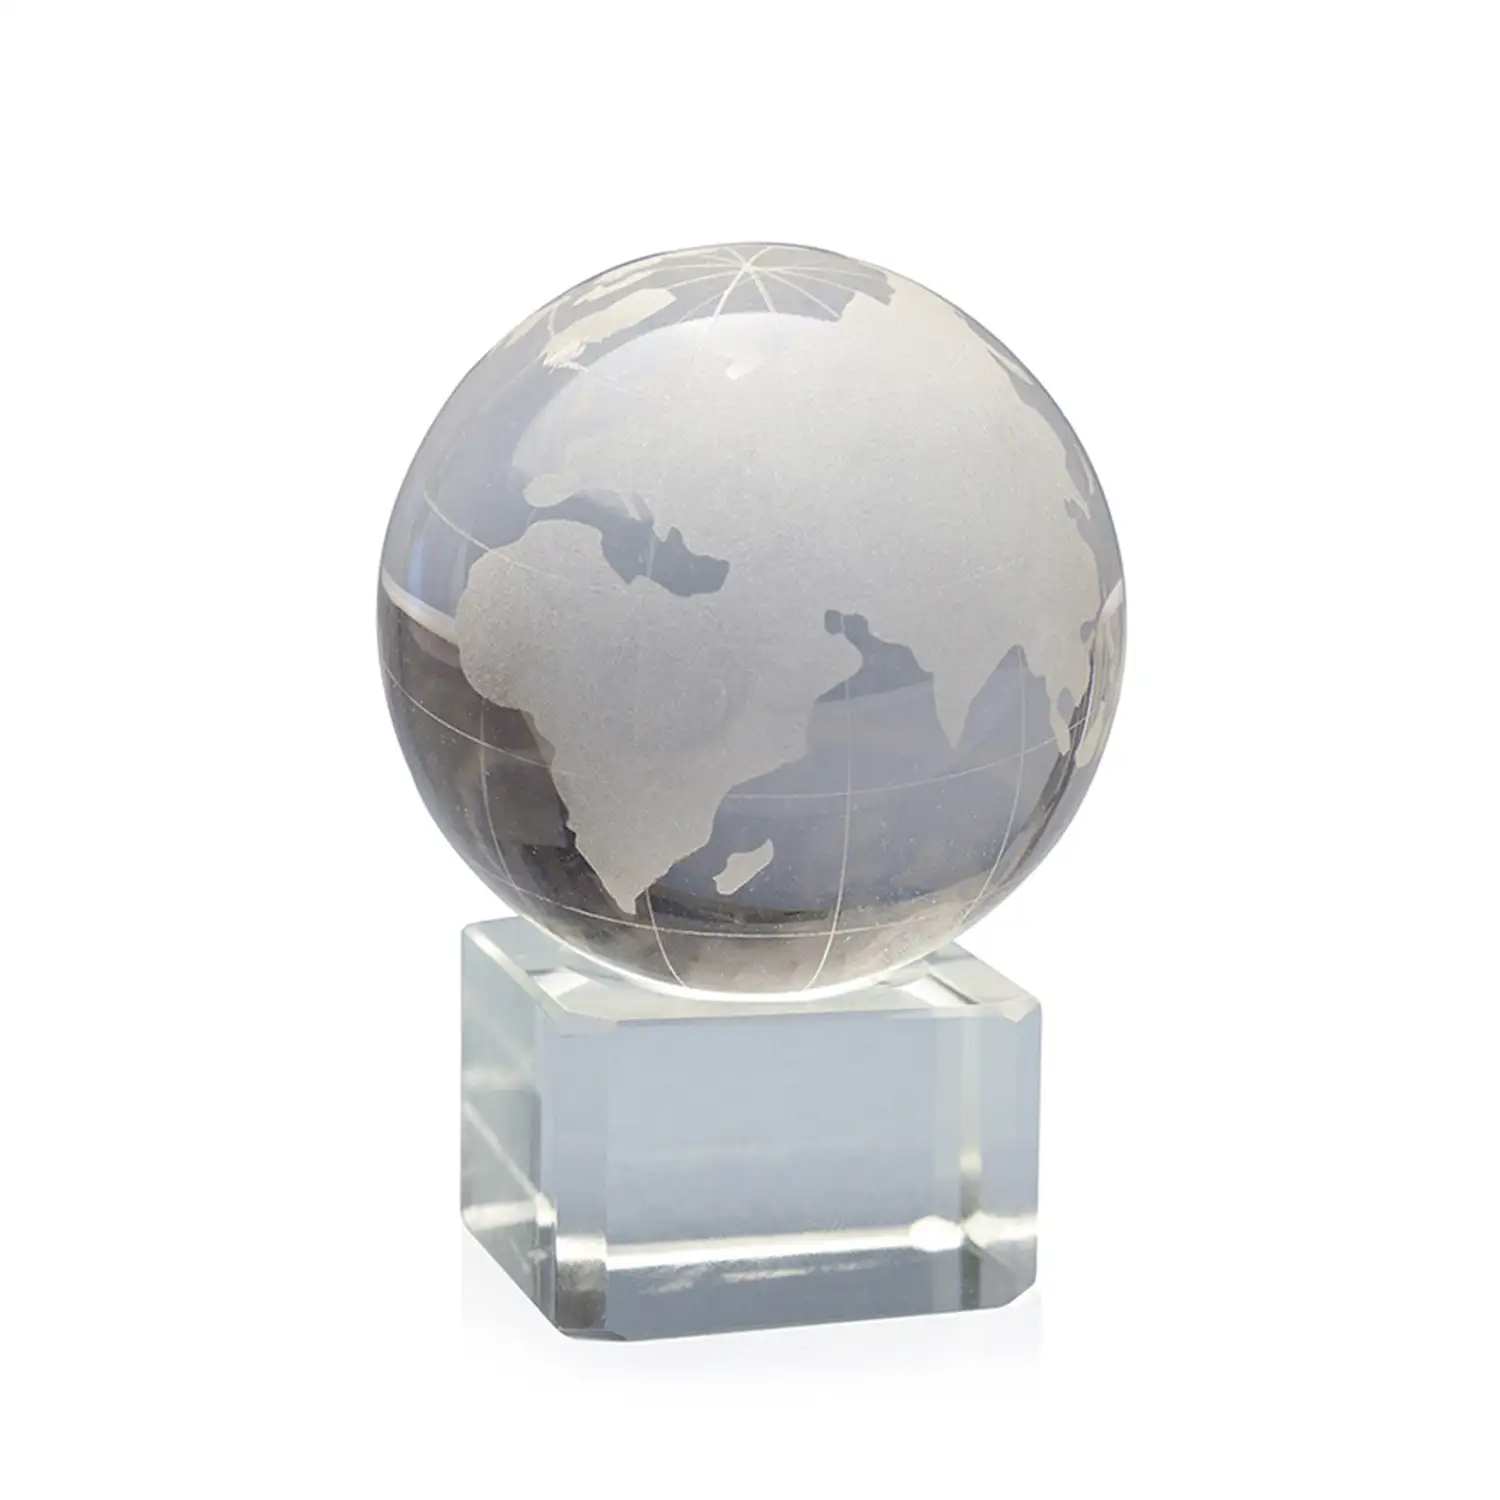 World, bola de cristal con forma de planeta Tierra.